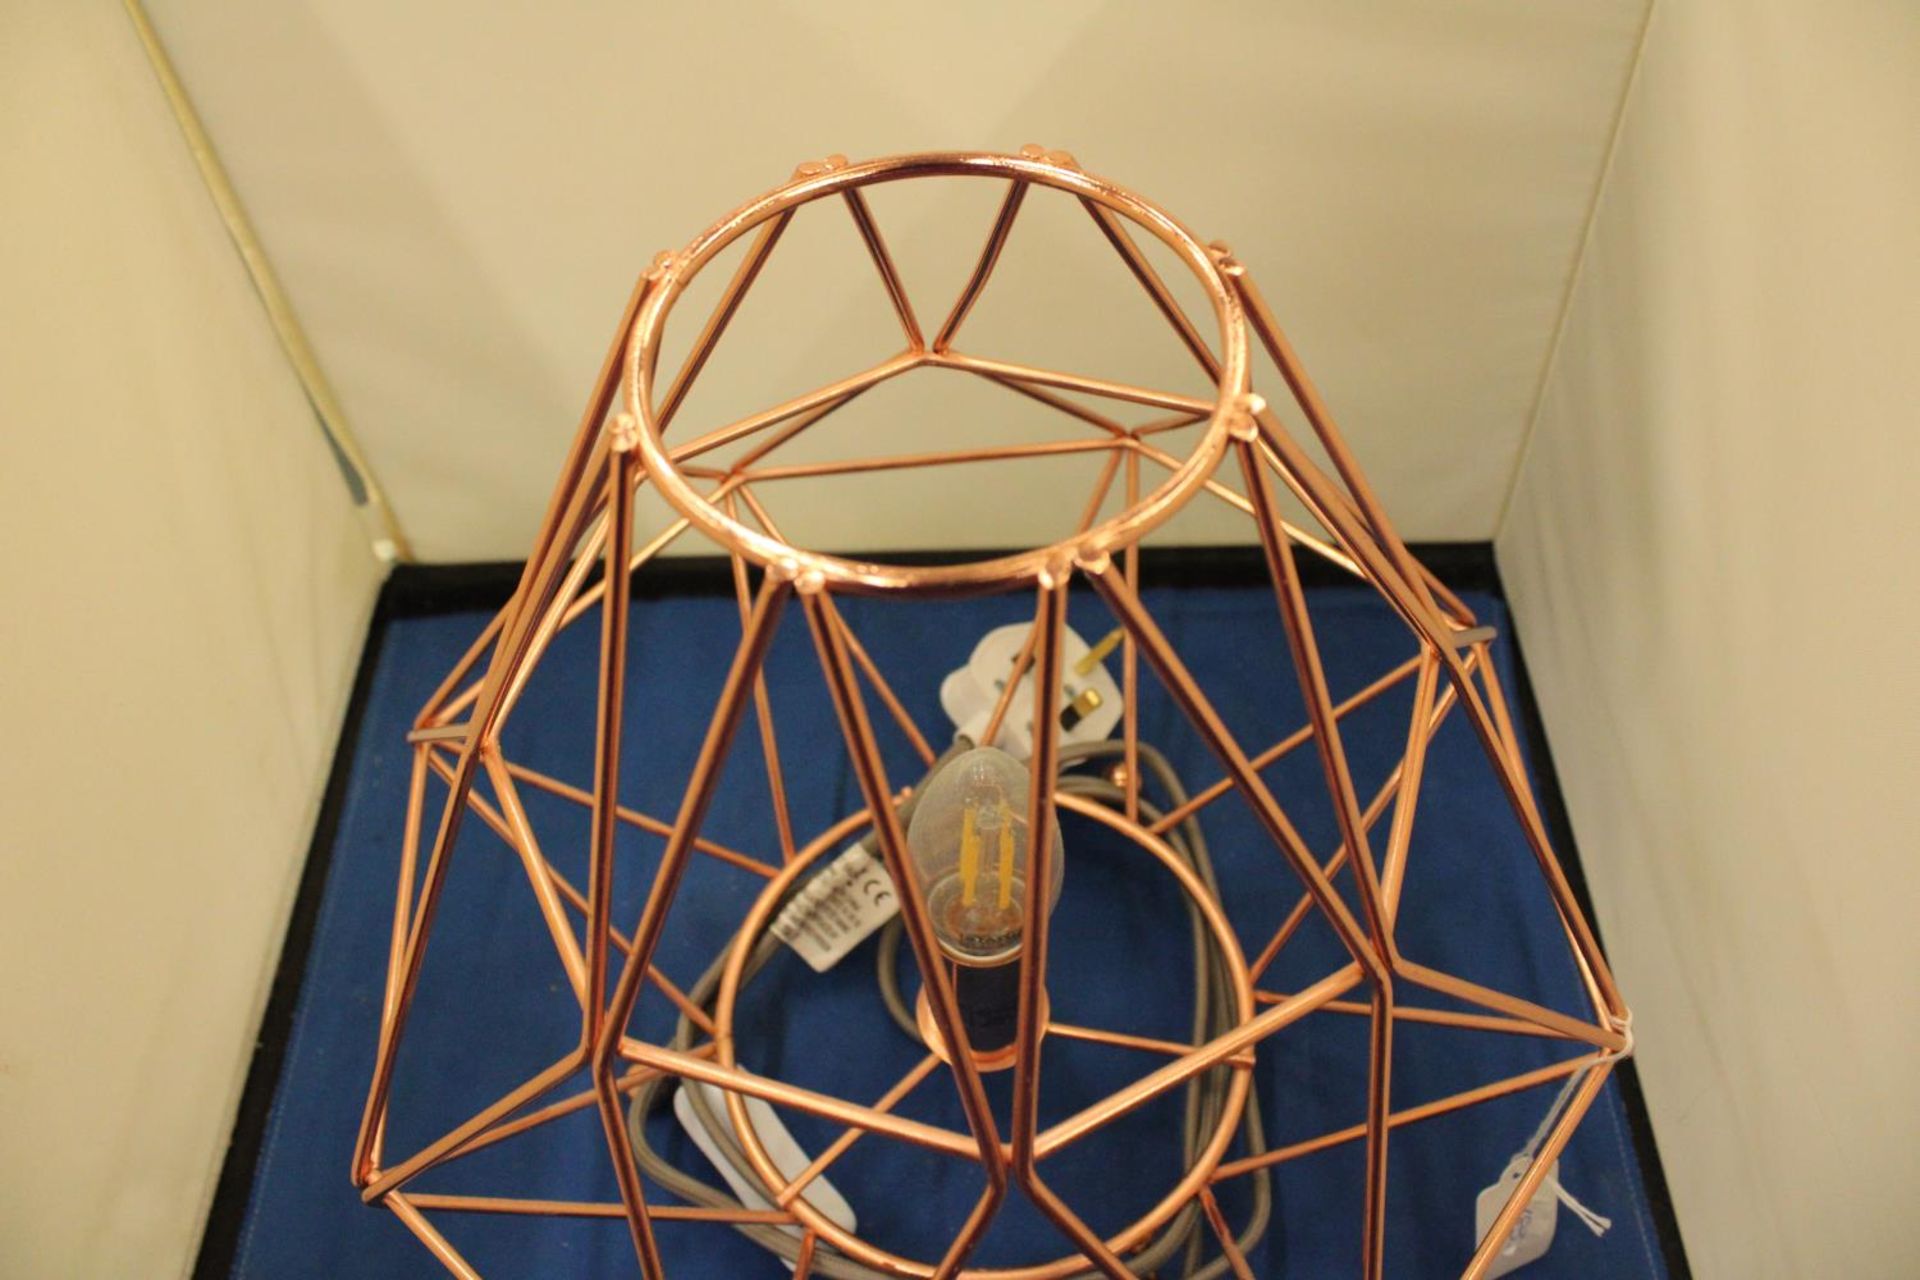 A RETRO COPPER COLOURED TABLE LAMP - Image 3 of 3